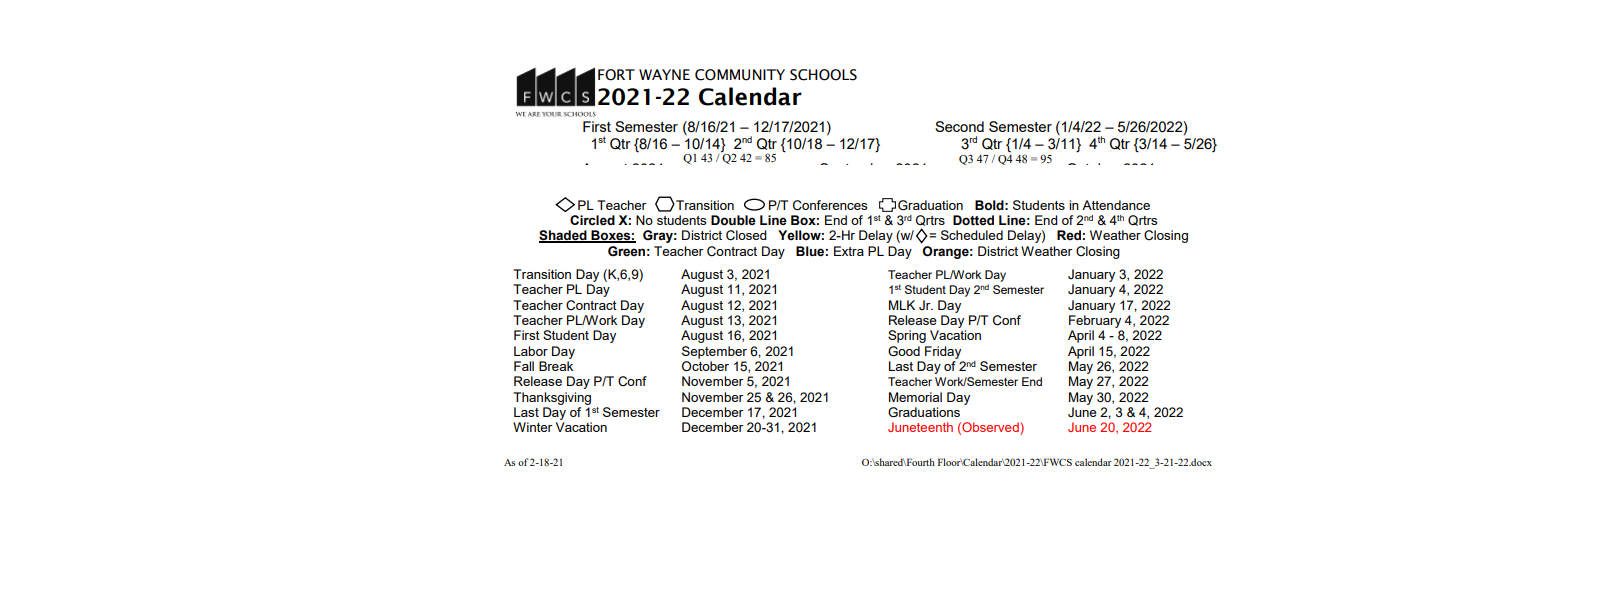 District School Academic Calendar Key for Arlington Elementary School